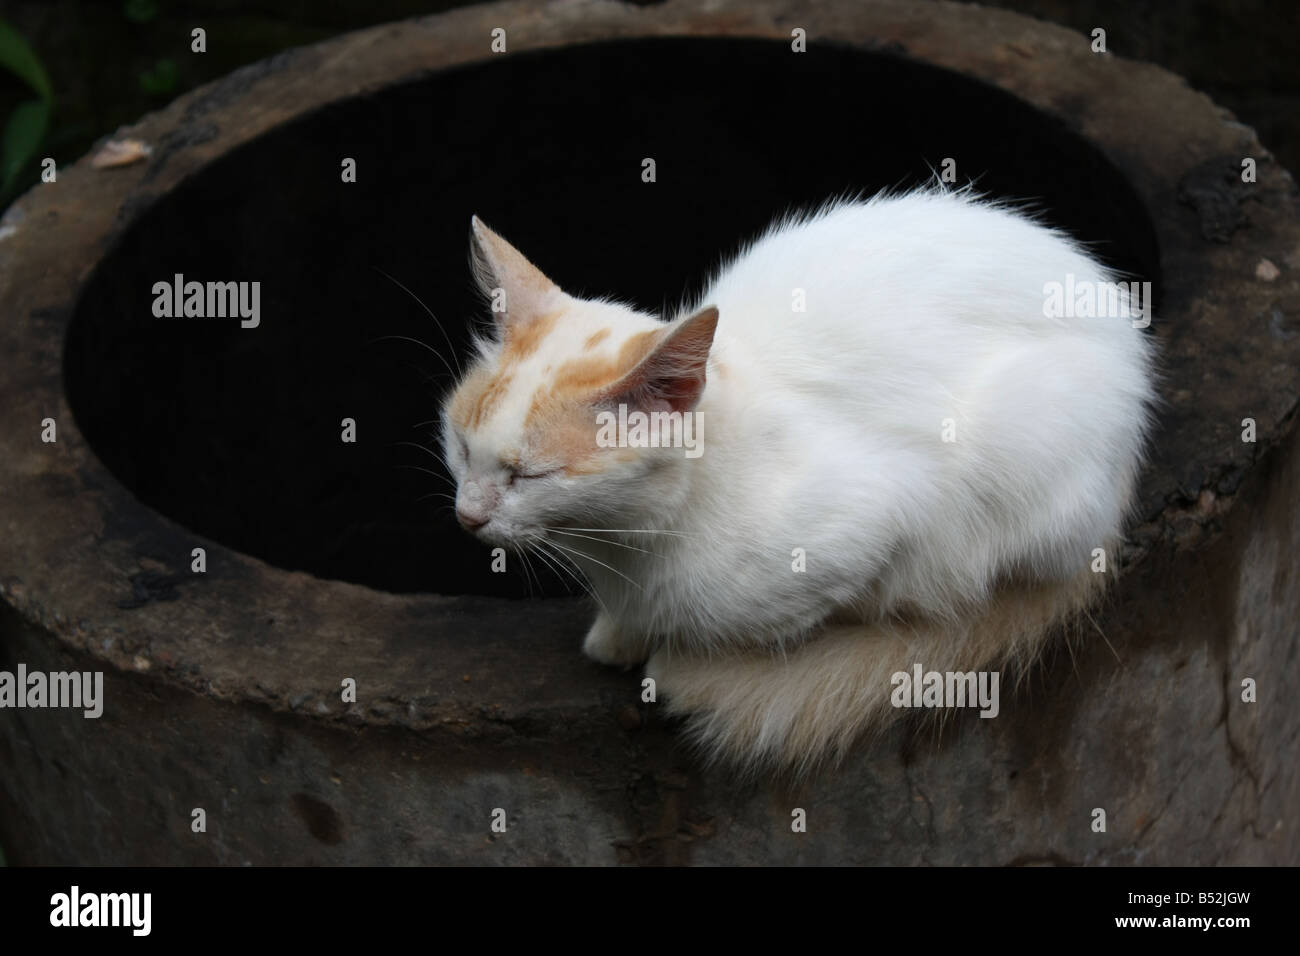 A cat meditating on top of a barrel Stock Photo